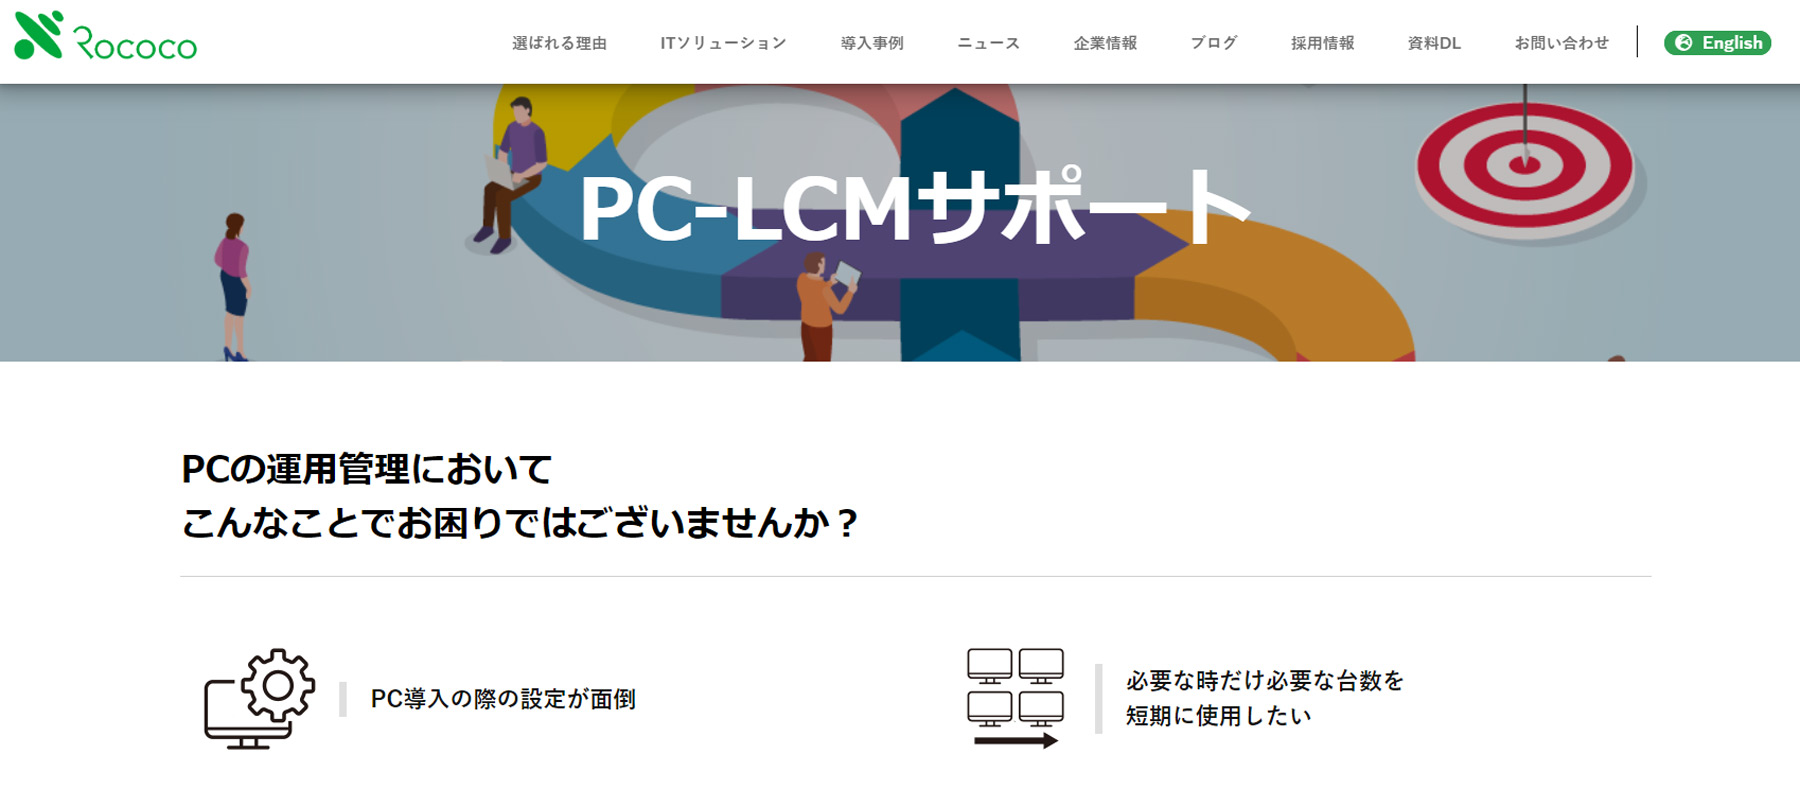 PC-LCMサポート公式Webサイト